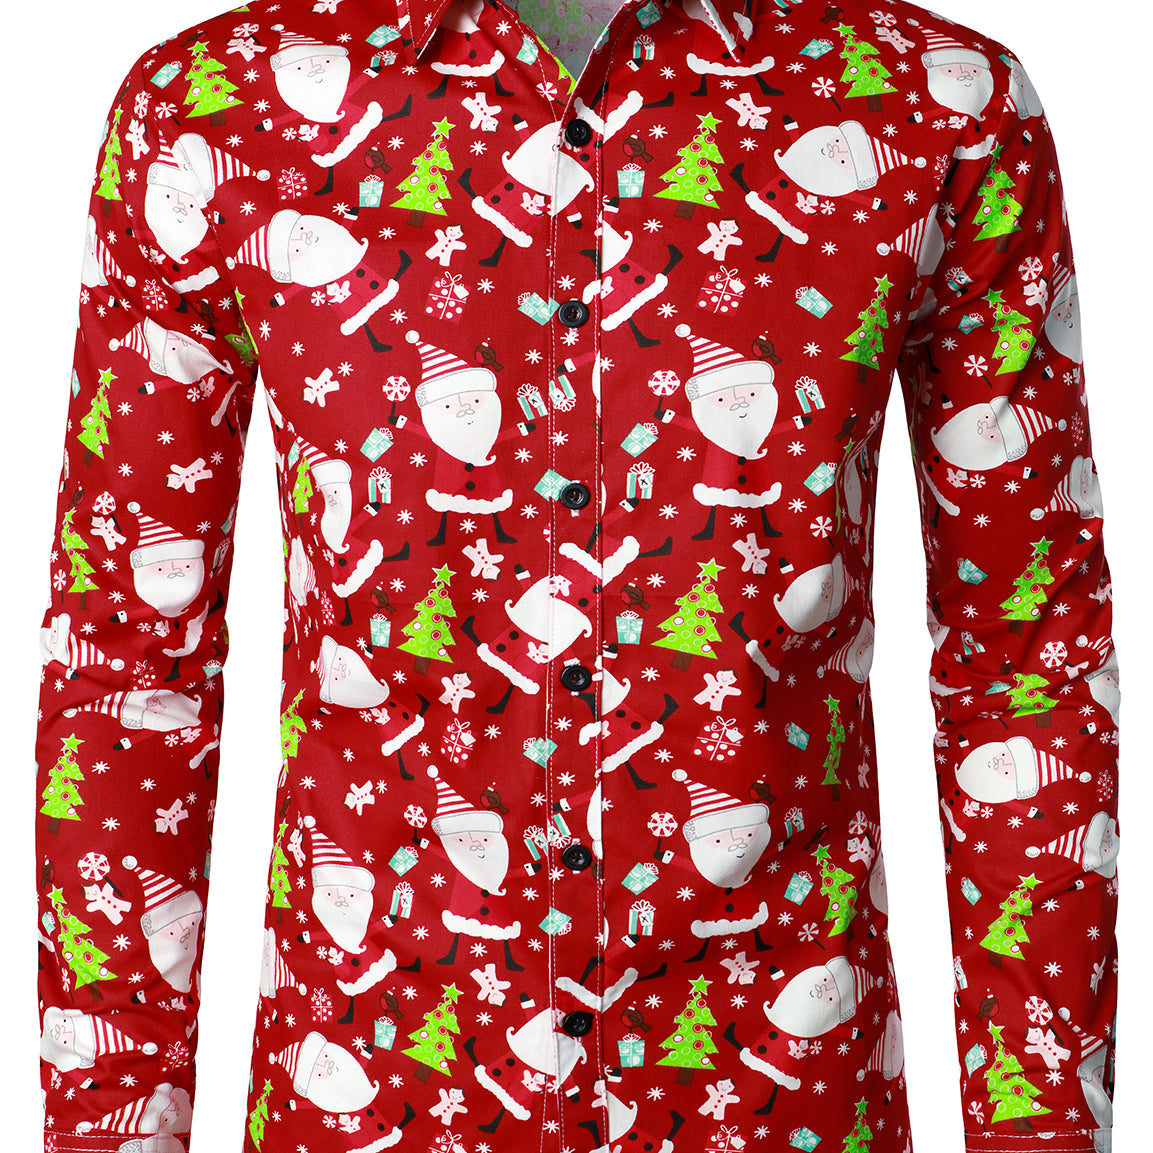 Men's Christmas Santa Print Regular Fit Red Button Up Long Sleeve Dress Shirt